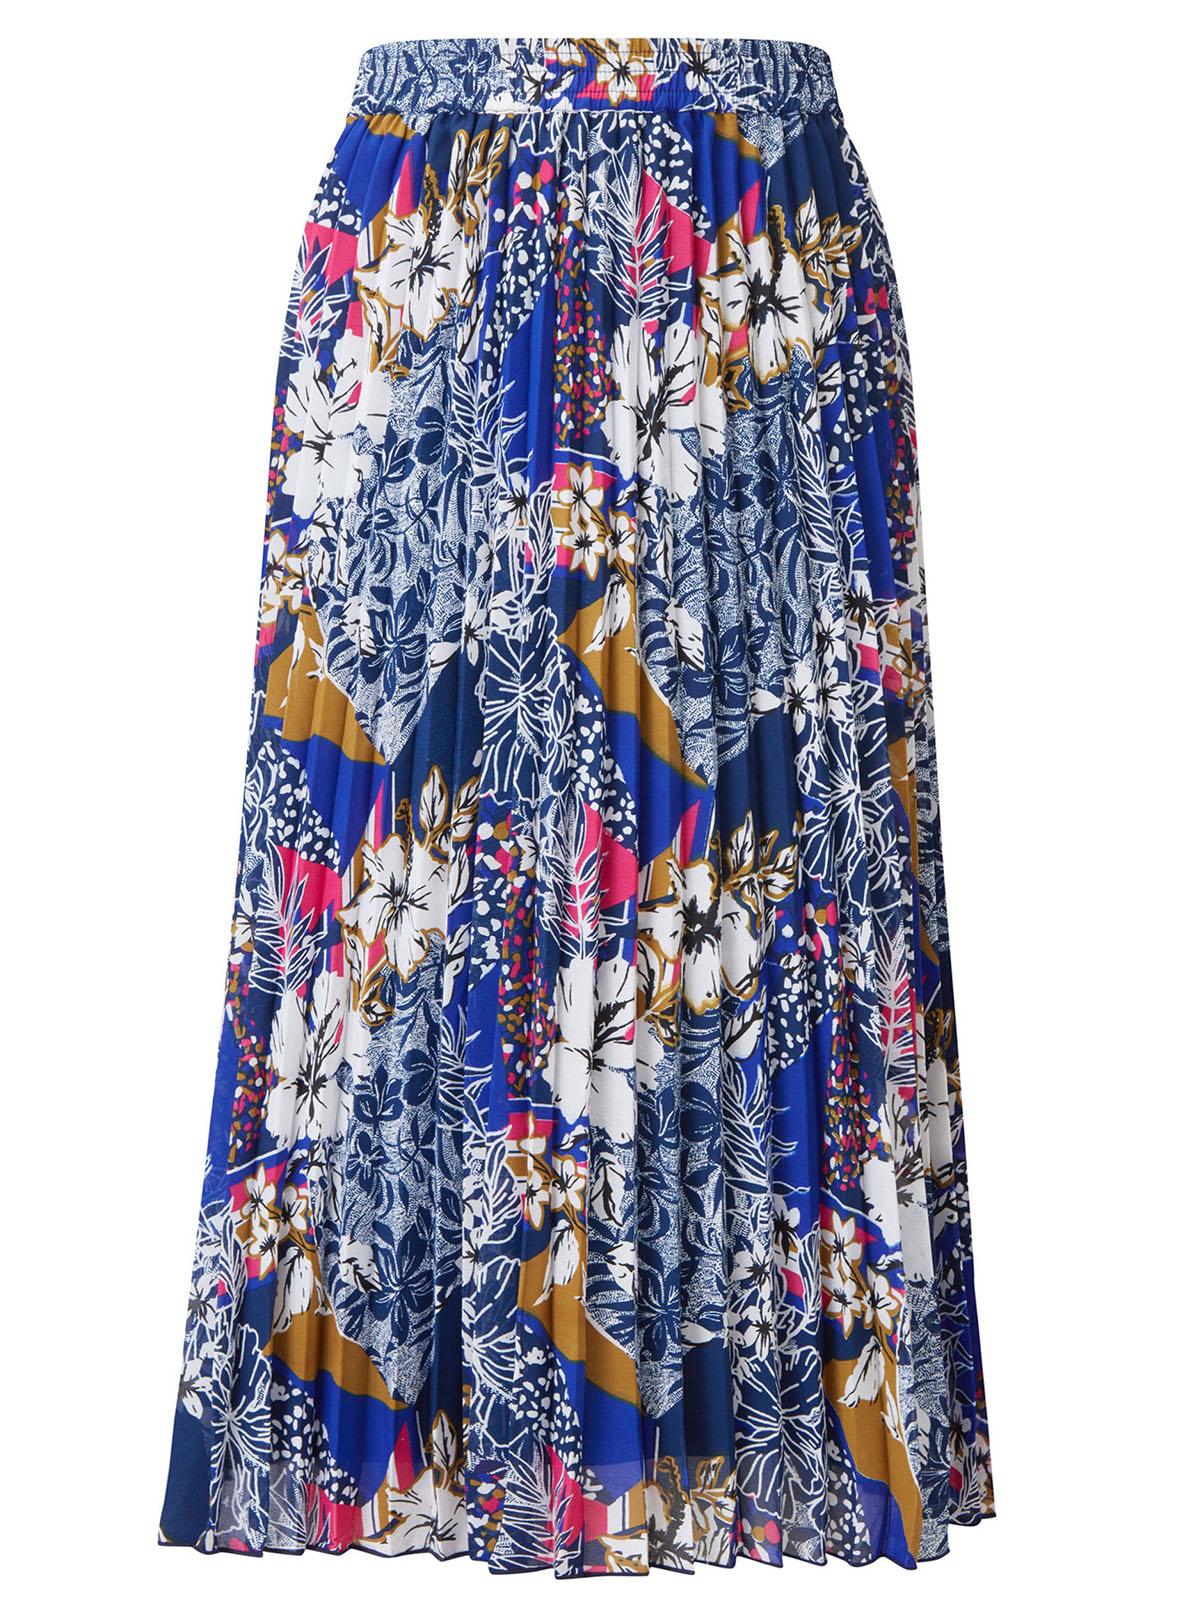 Cotton Tr4ders BLUE Patchwork Print Swishy Pleated Midi Skirt - Size 10 ...